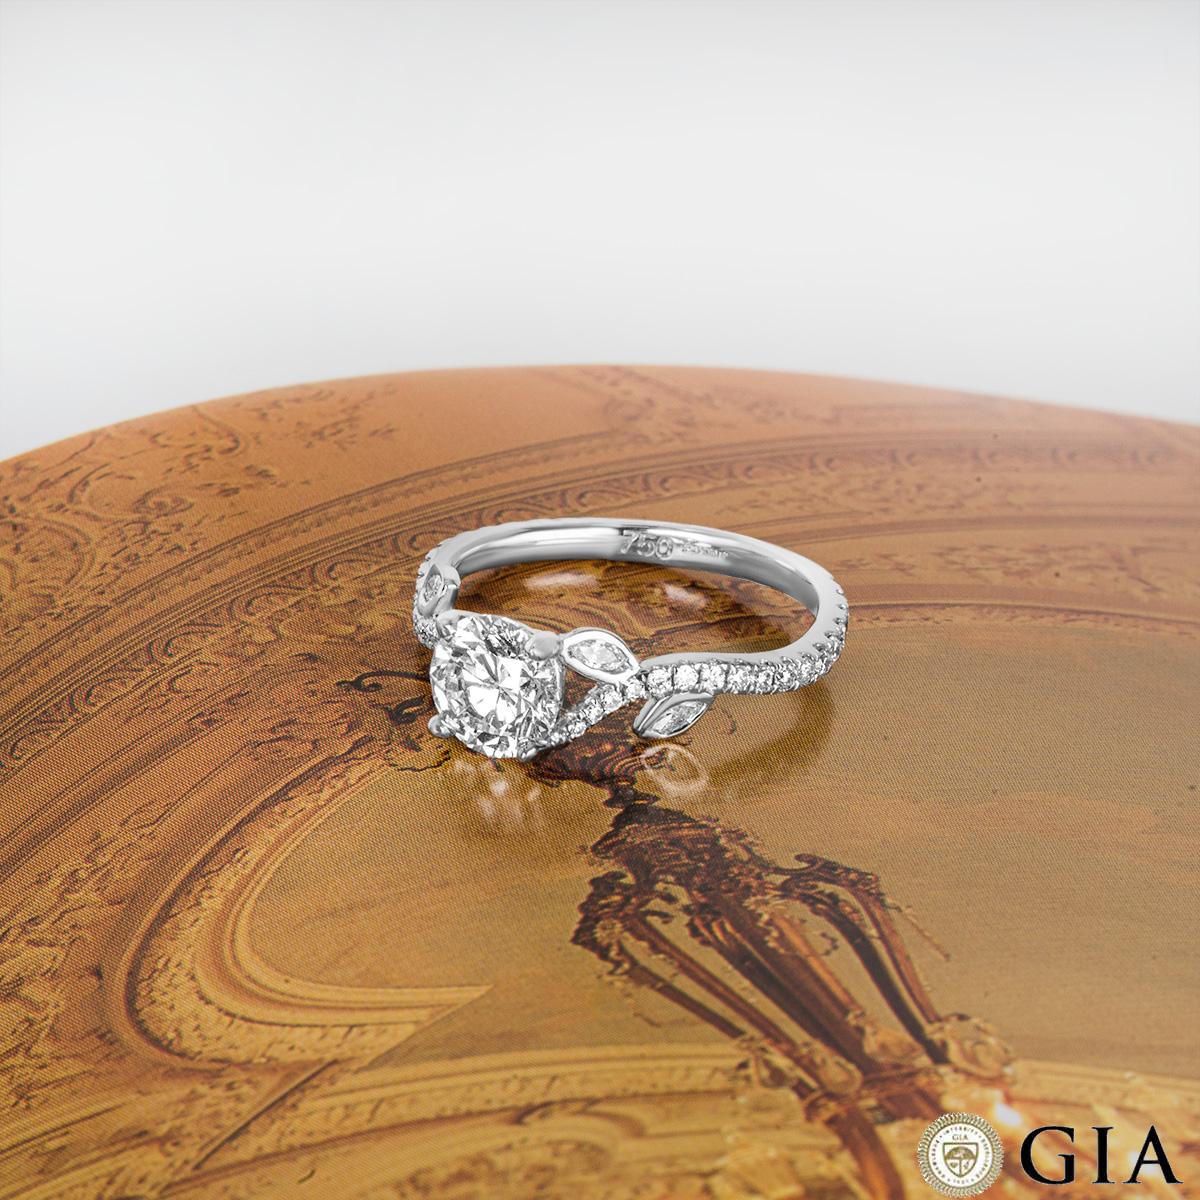 GIA Certified White Gold Round Brilliant Cut Diamond Ring 1.01ct E/VVS1 For Sale 2